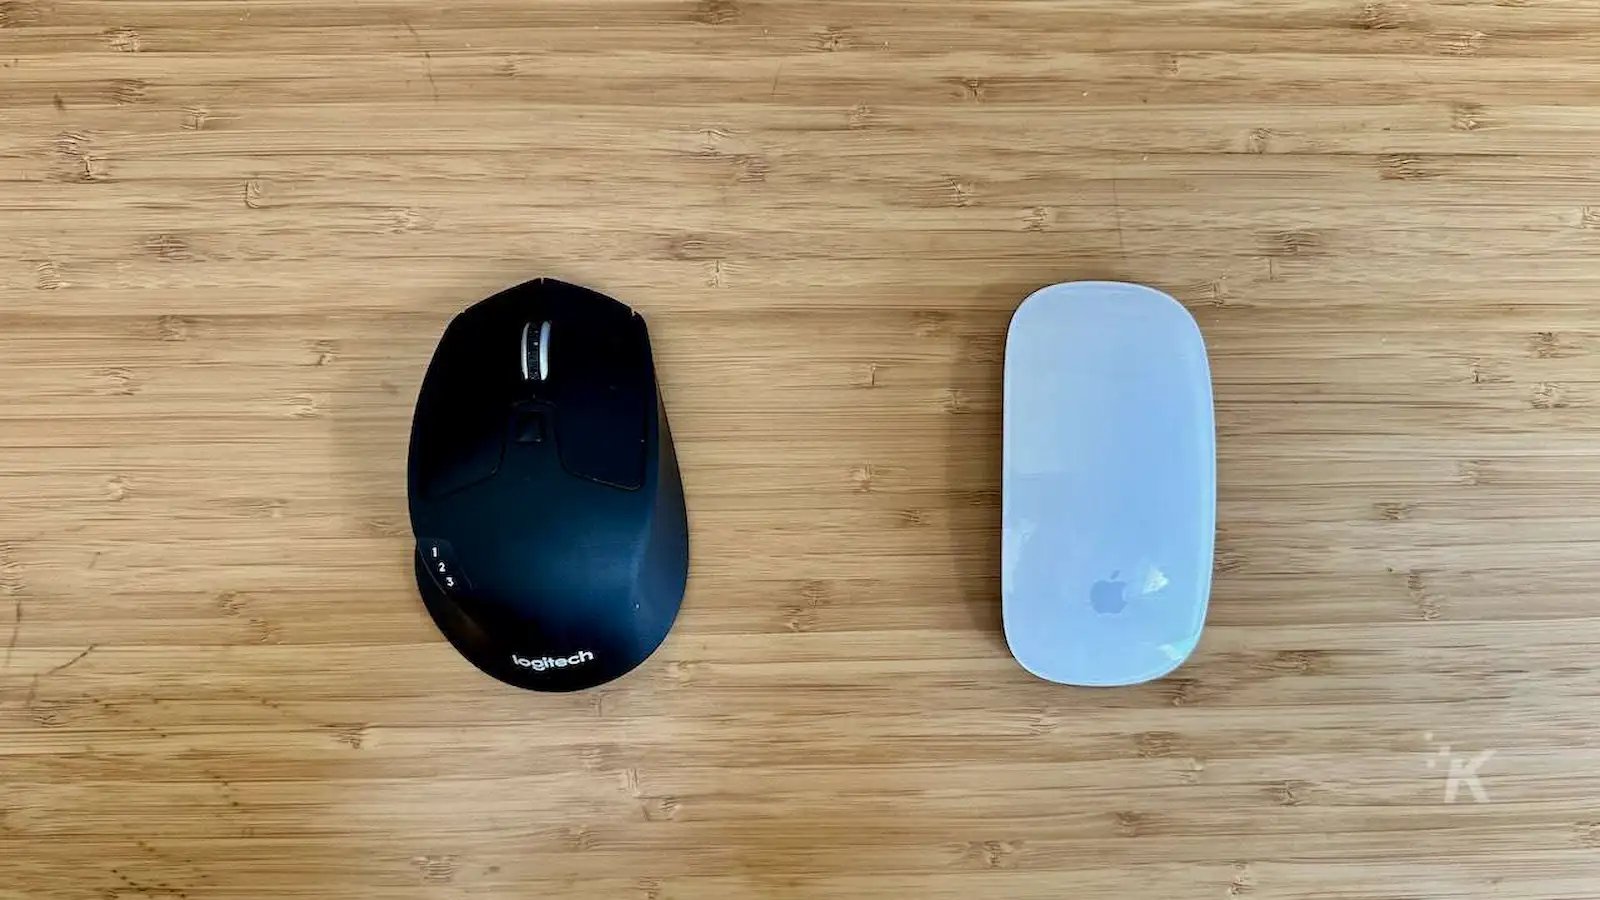 Logitech-Maus gegen Apple Magic Mouse auf dem Schreibtisch